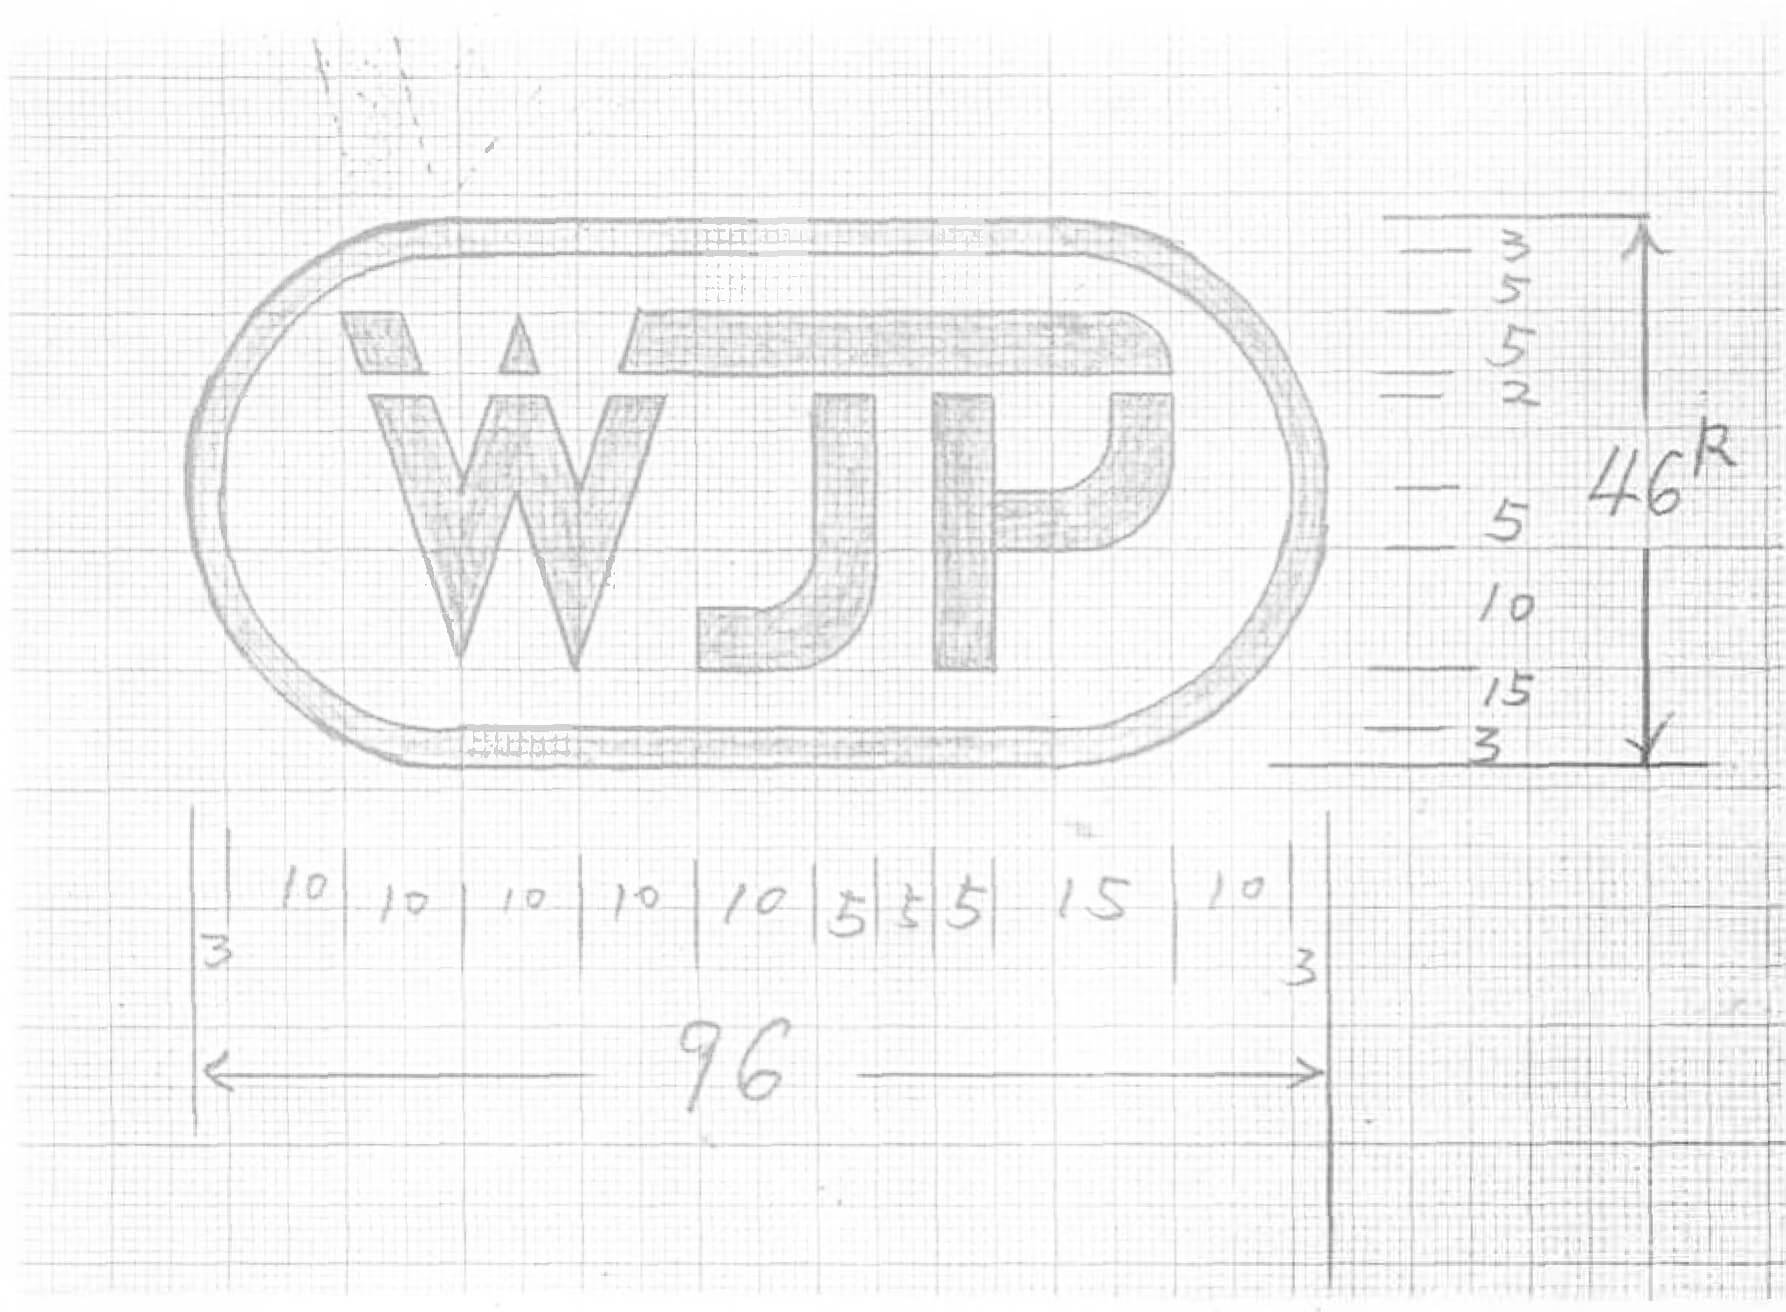 WJP logo sketch